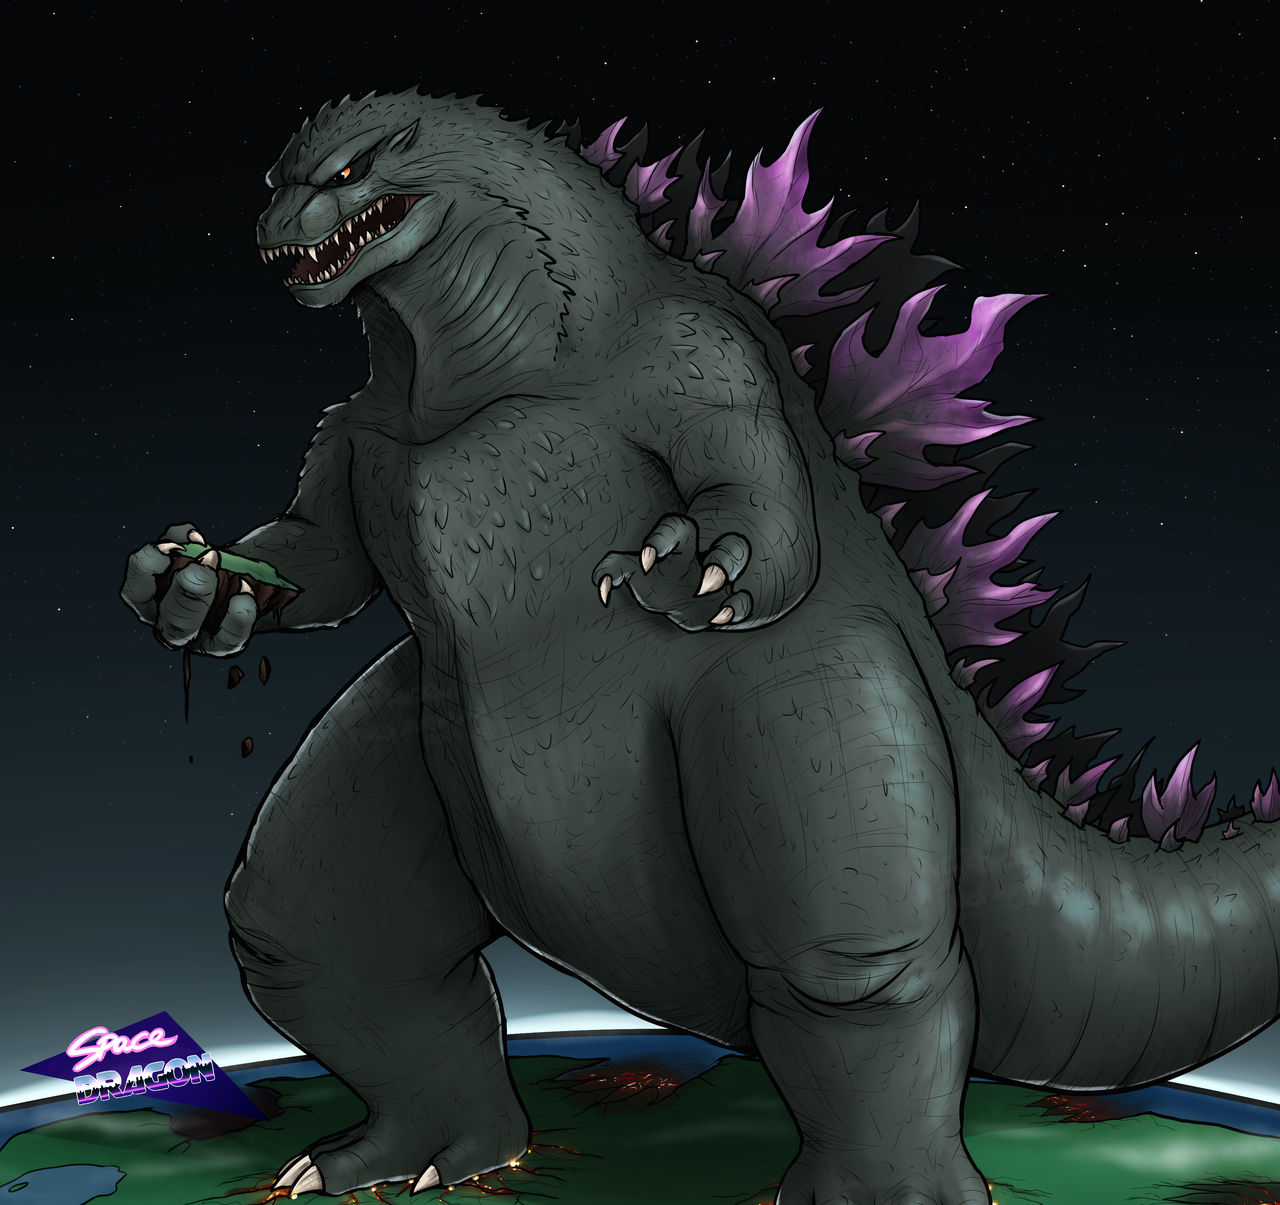 Godzilla Earth by SpaceDragon14 on Newgrounds